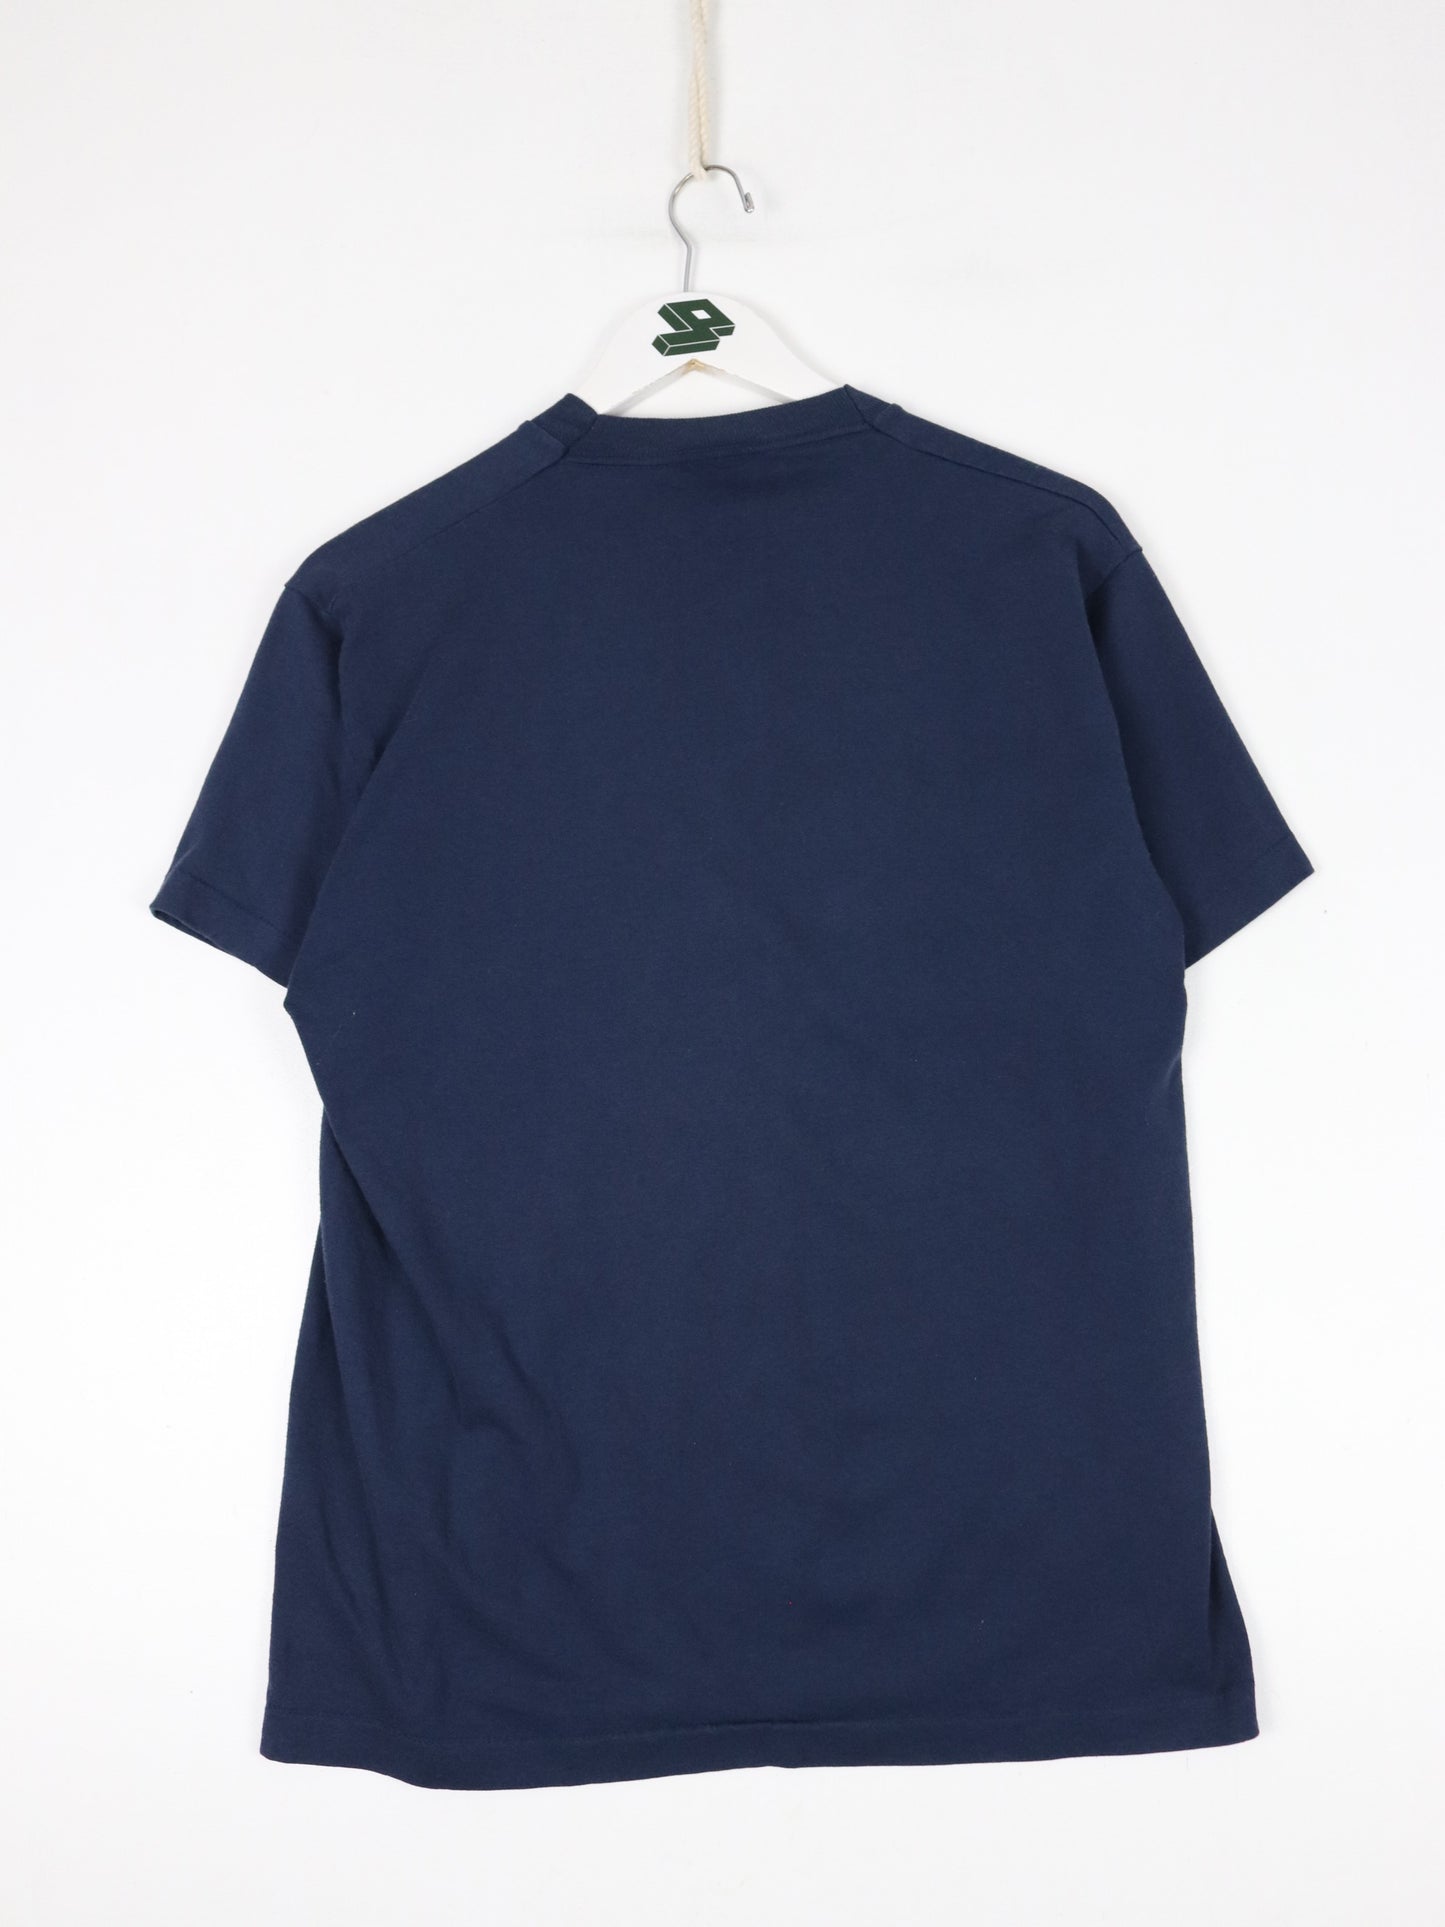 Vintage Australia T Shirt Fits Mens Medium Blue 90s